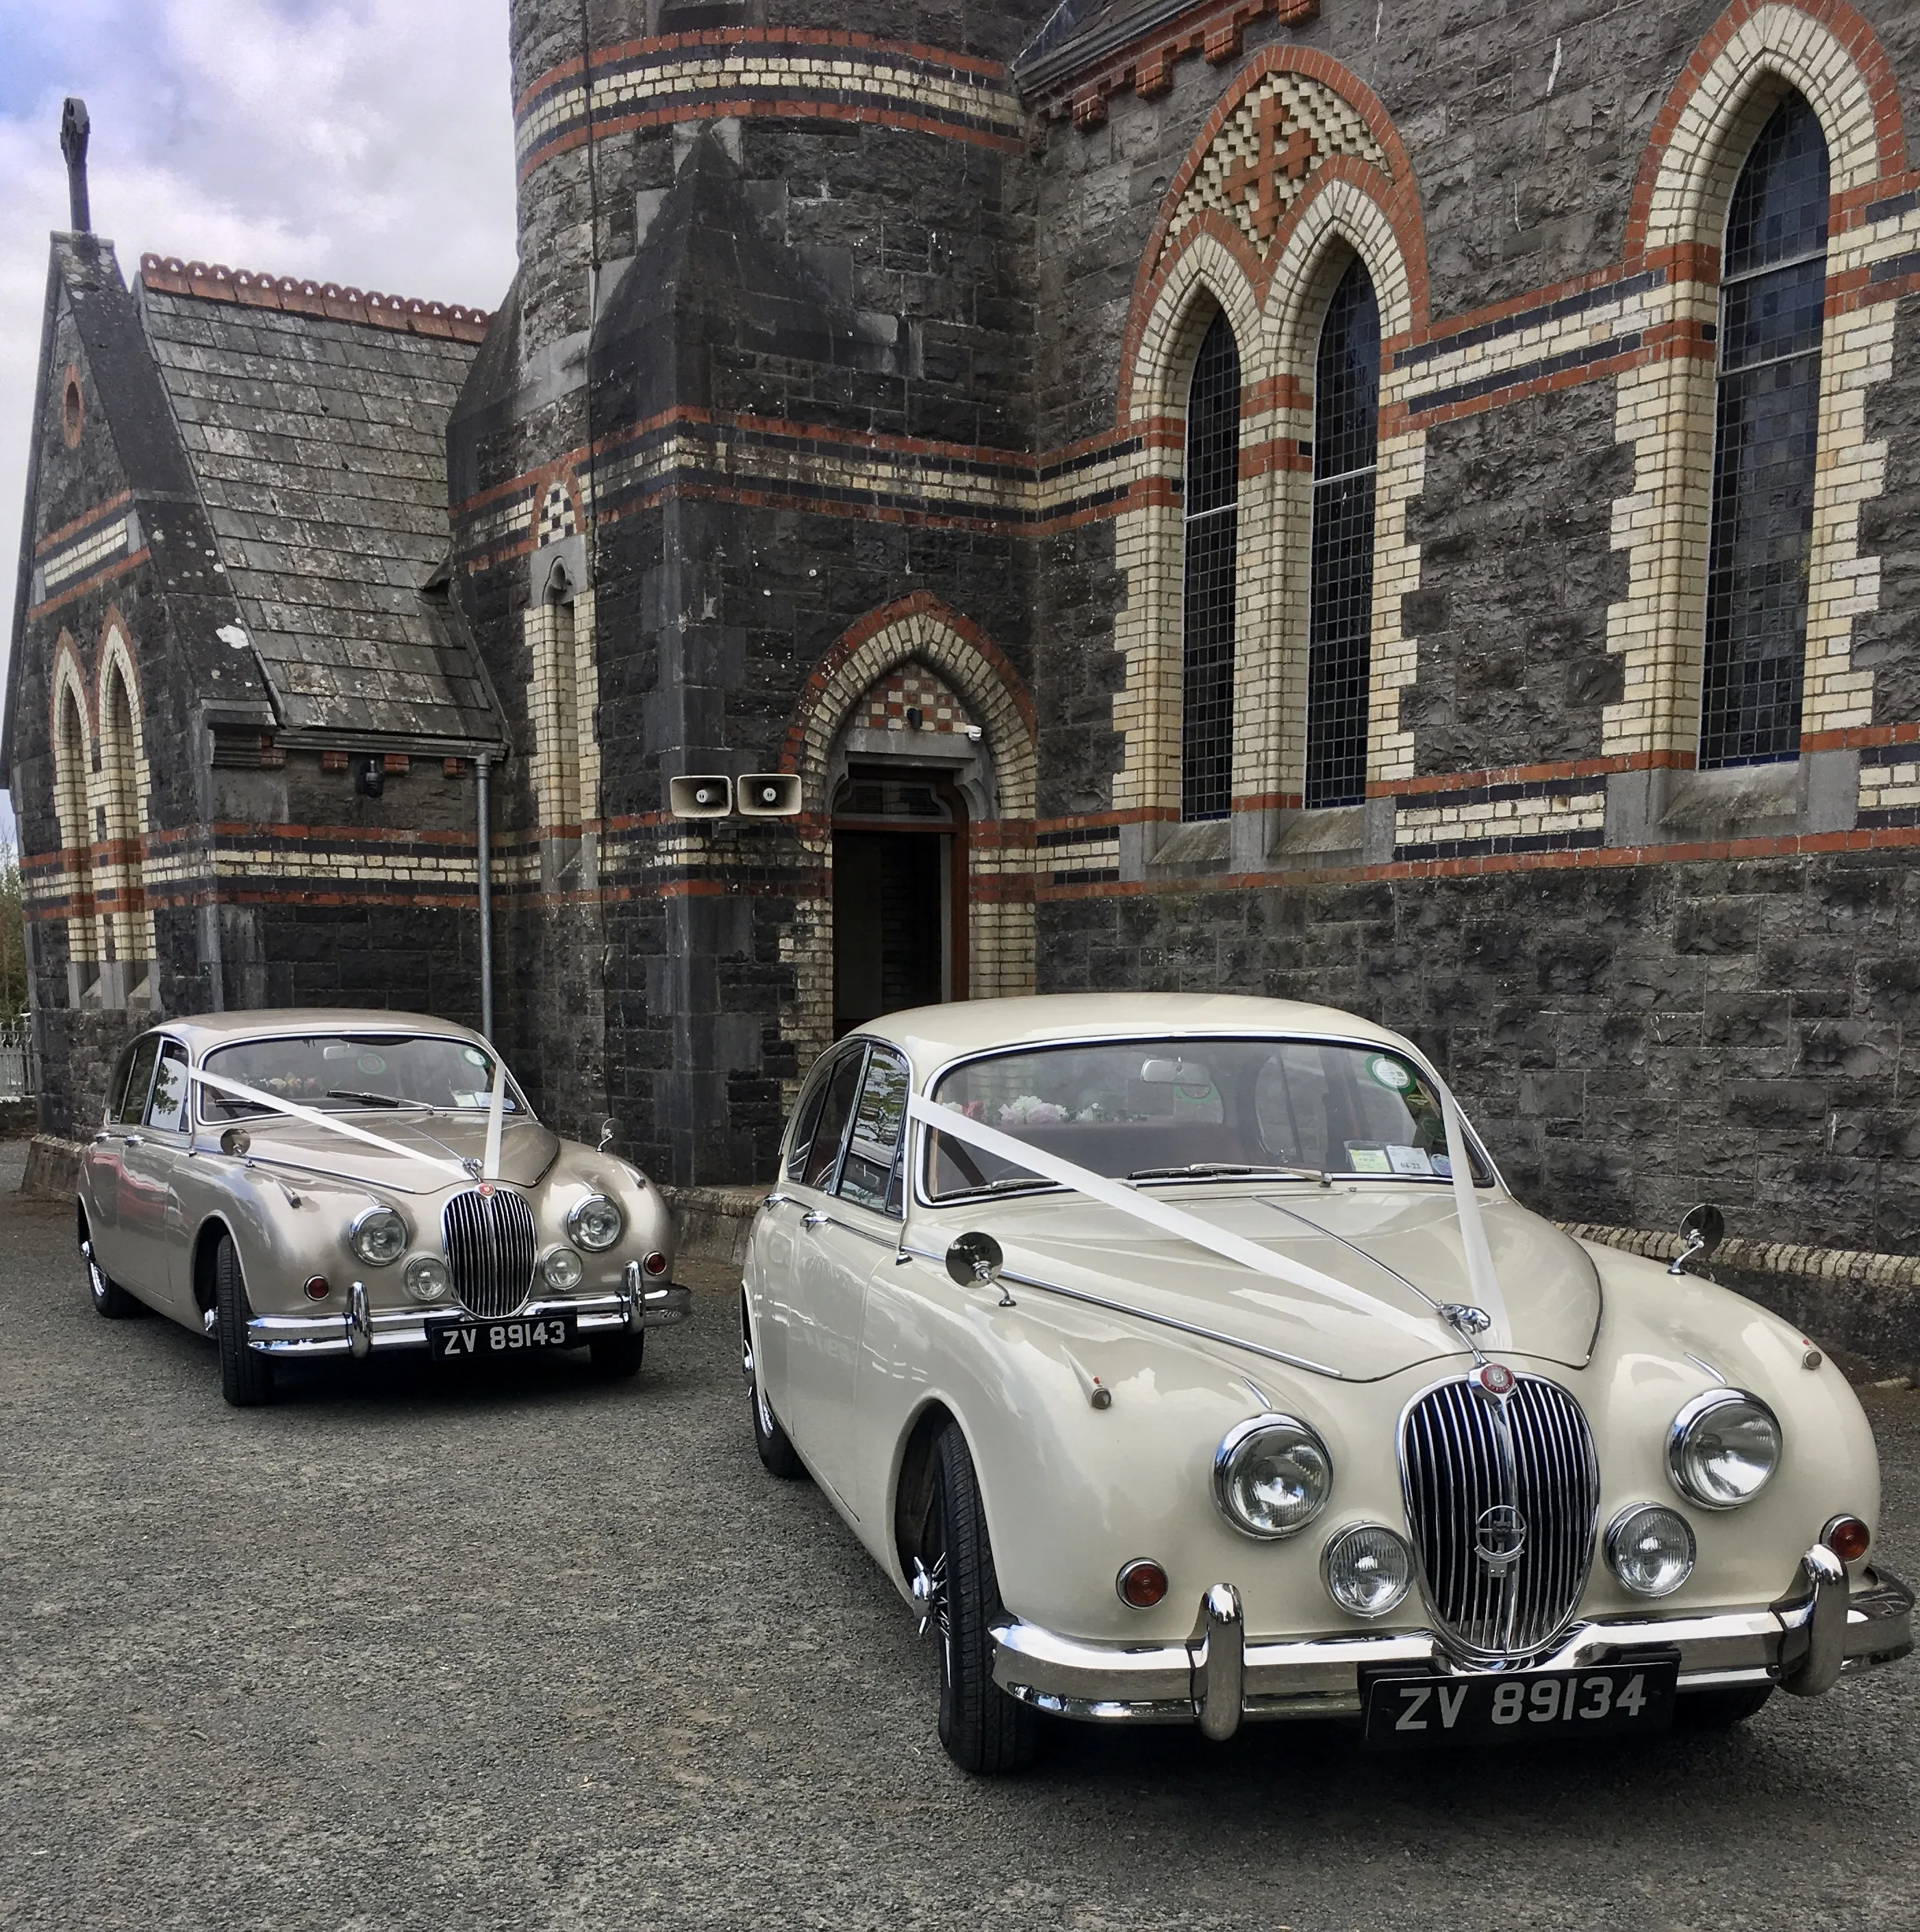 One of our vintage wedding cars at Foxrock Church Dublin”width=